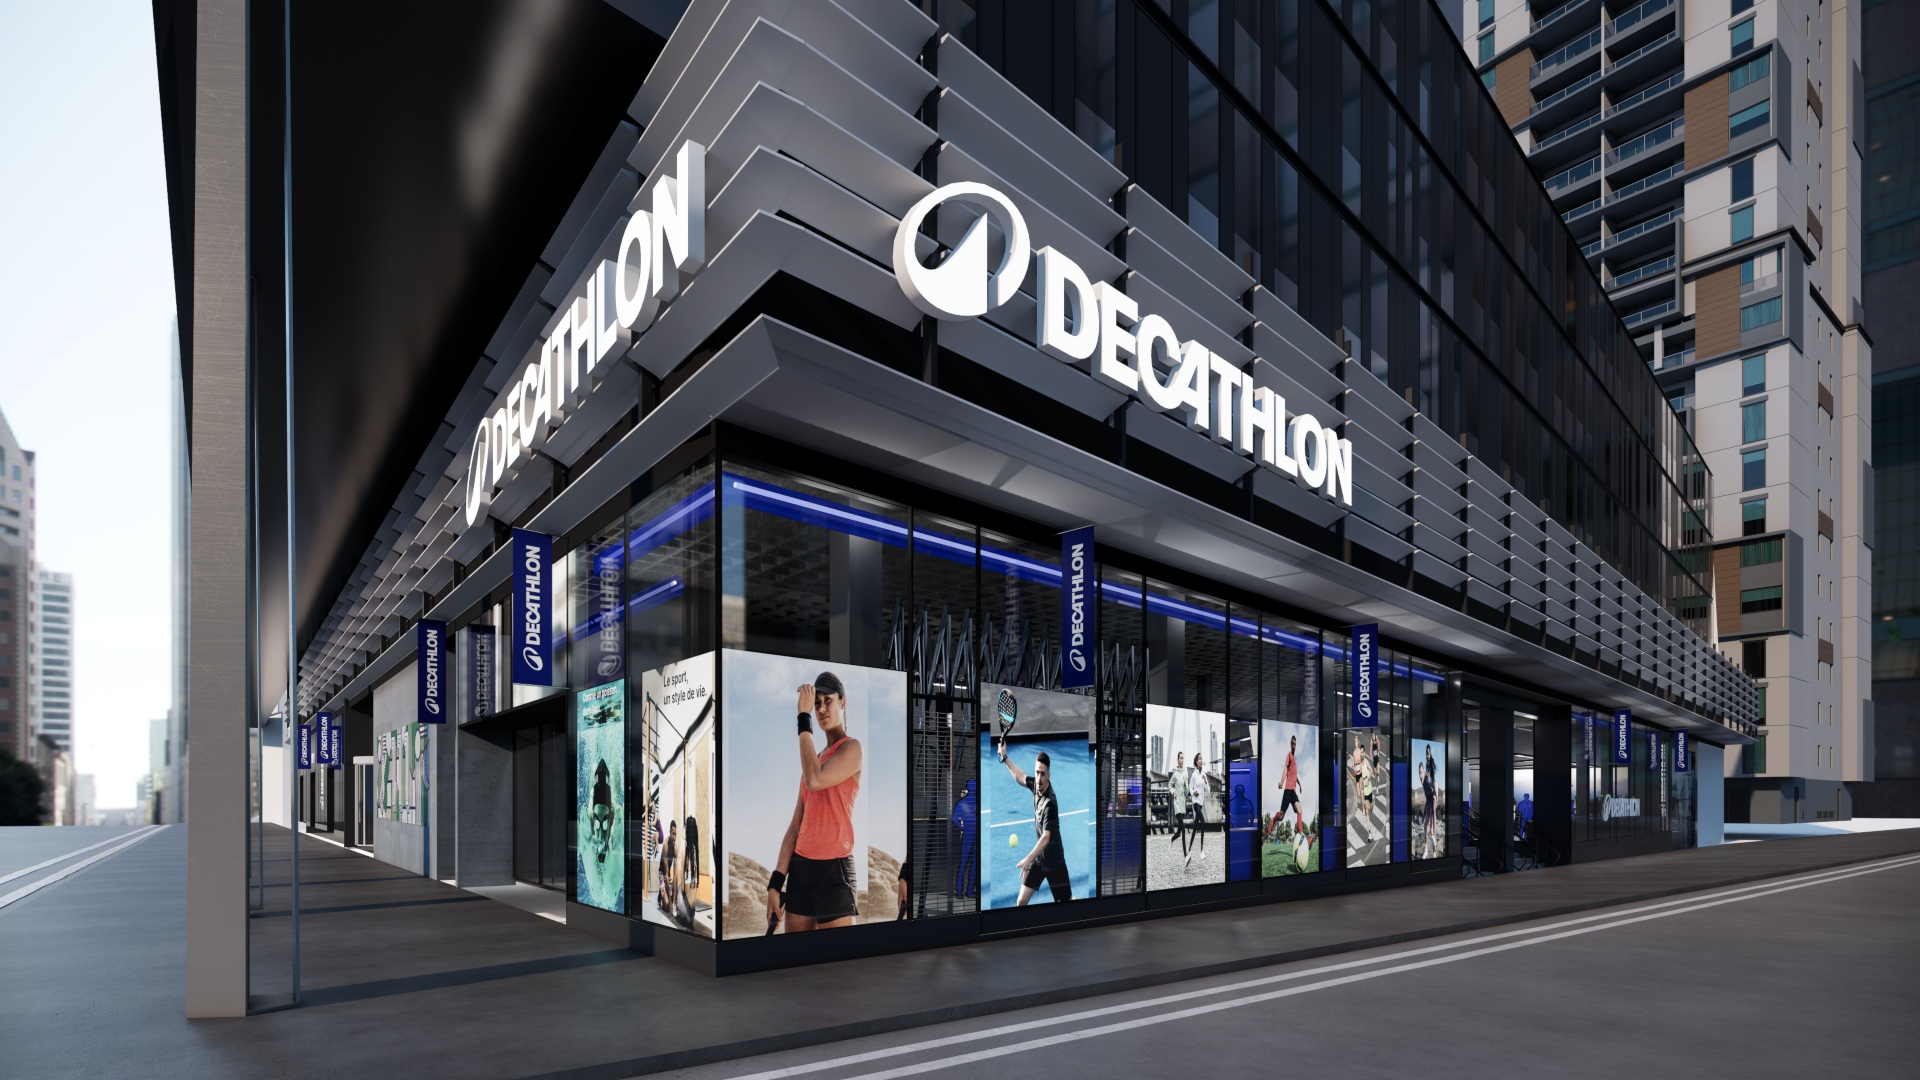 Decathlon rebranding - new roles for digital signage (Photo: Decathlon)